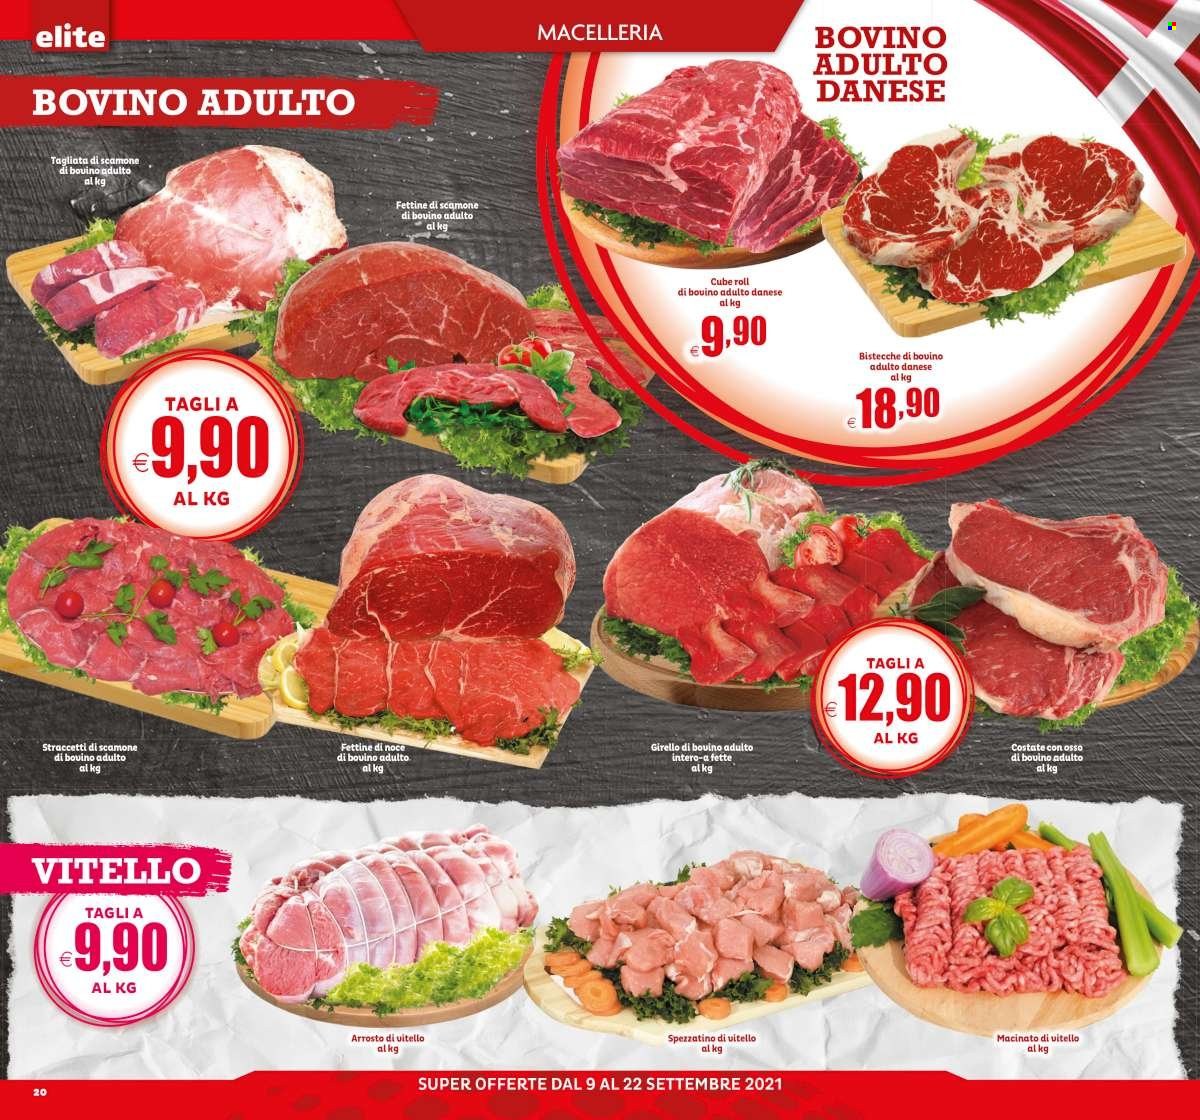 thumbnail - Volantino Elite Supermercati - 9/9/2021 - 22/9/2021 - Prodotti in offerta - bistecca, spezzatino, manzo, vitello, tagliata, carne macinata. Pagina 20.